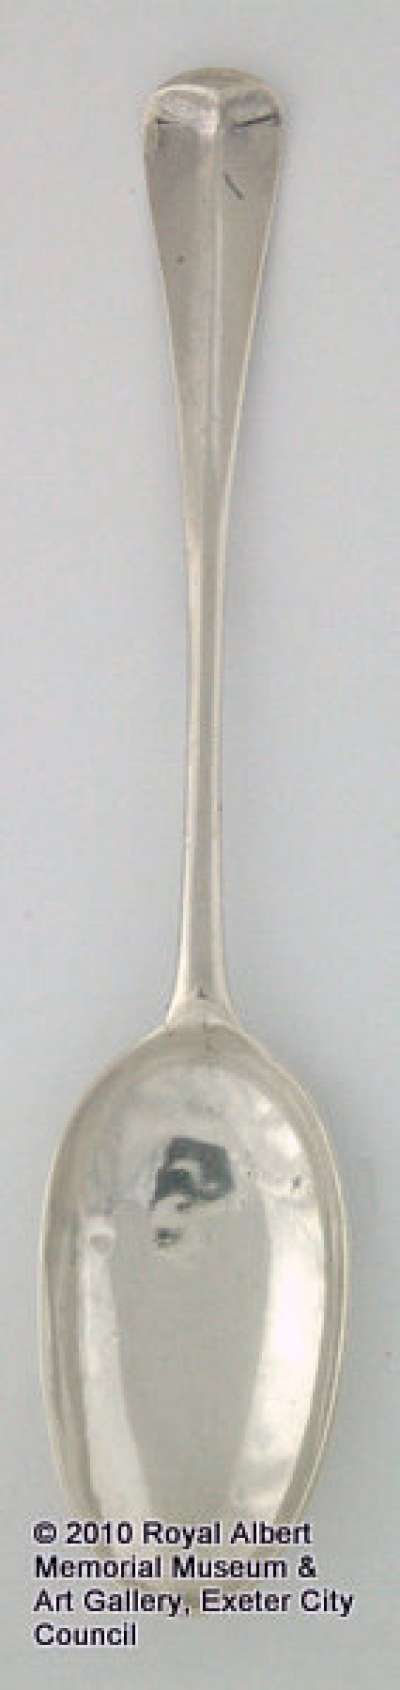 communion spoon